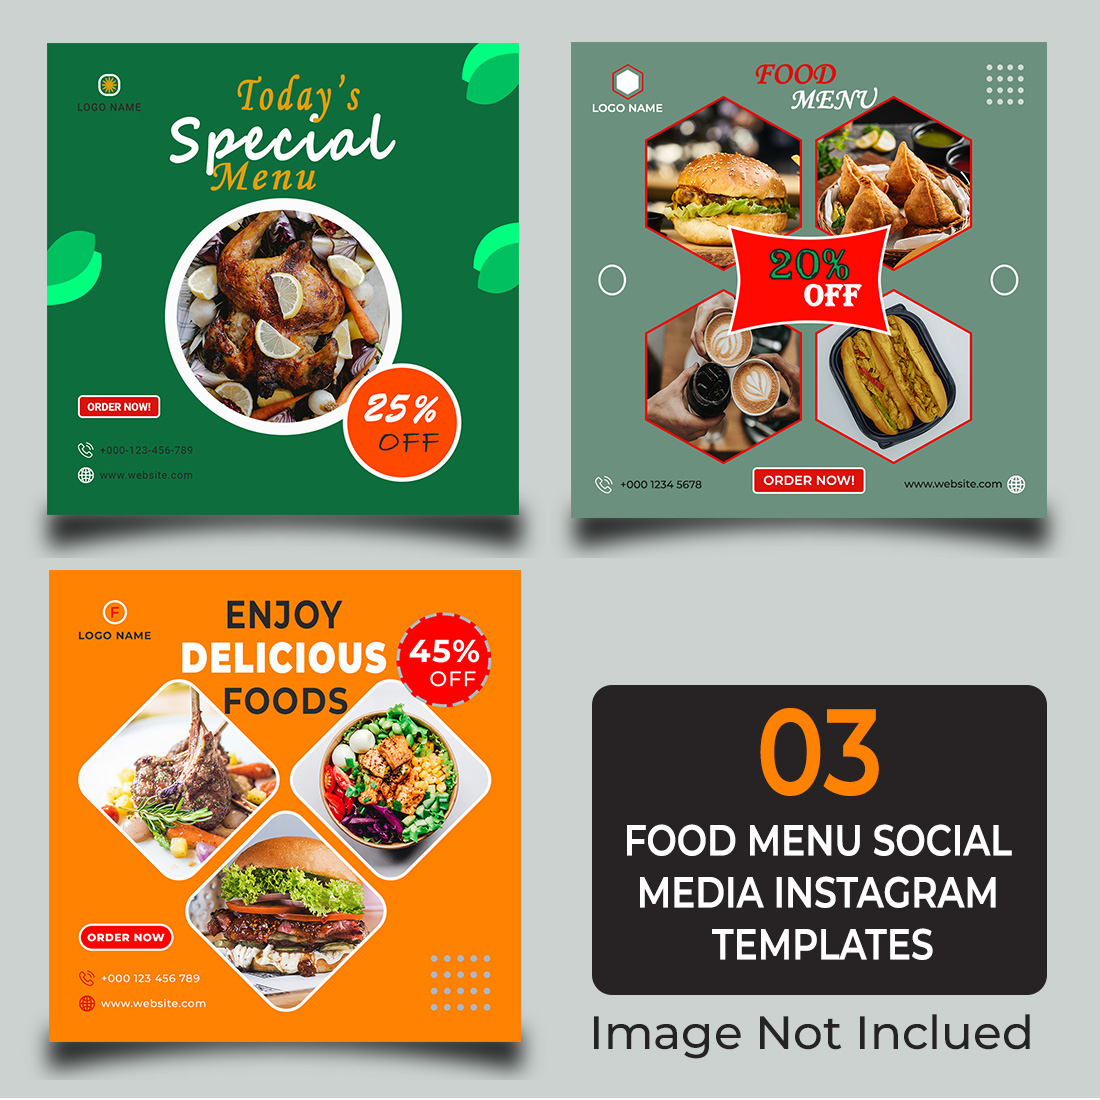 3 Food Menu Social Media Instagram Templates preview image.